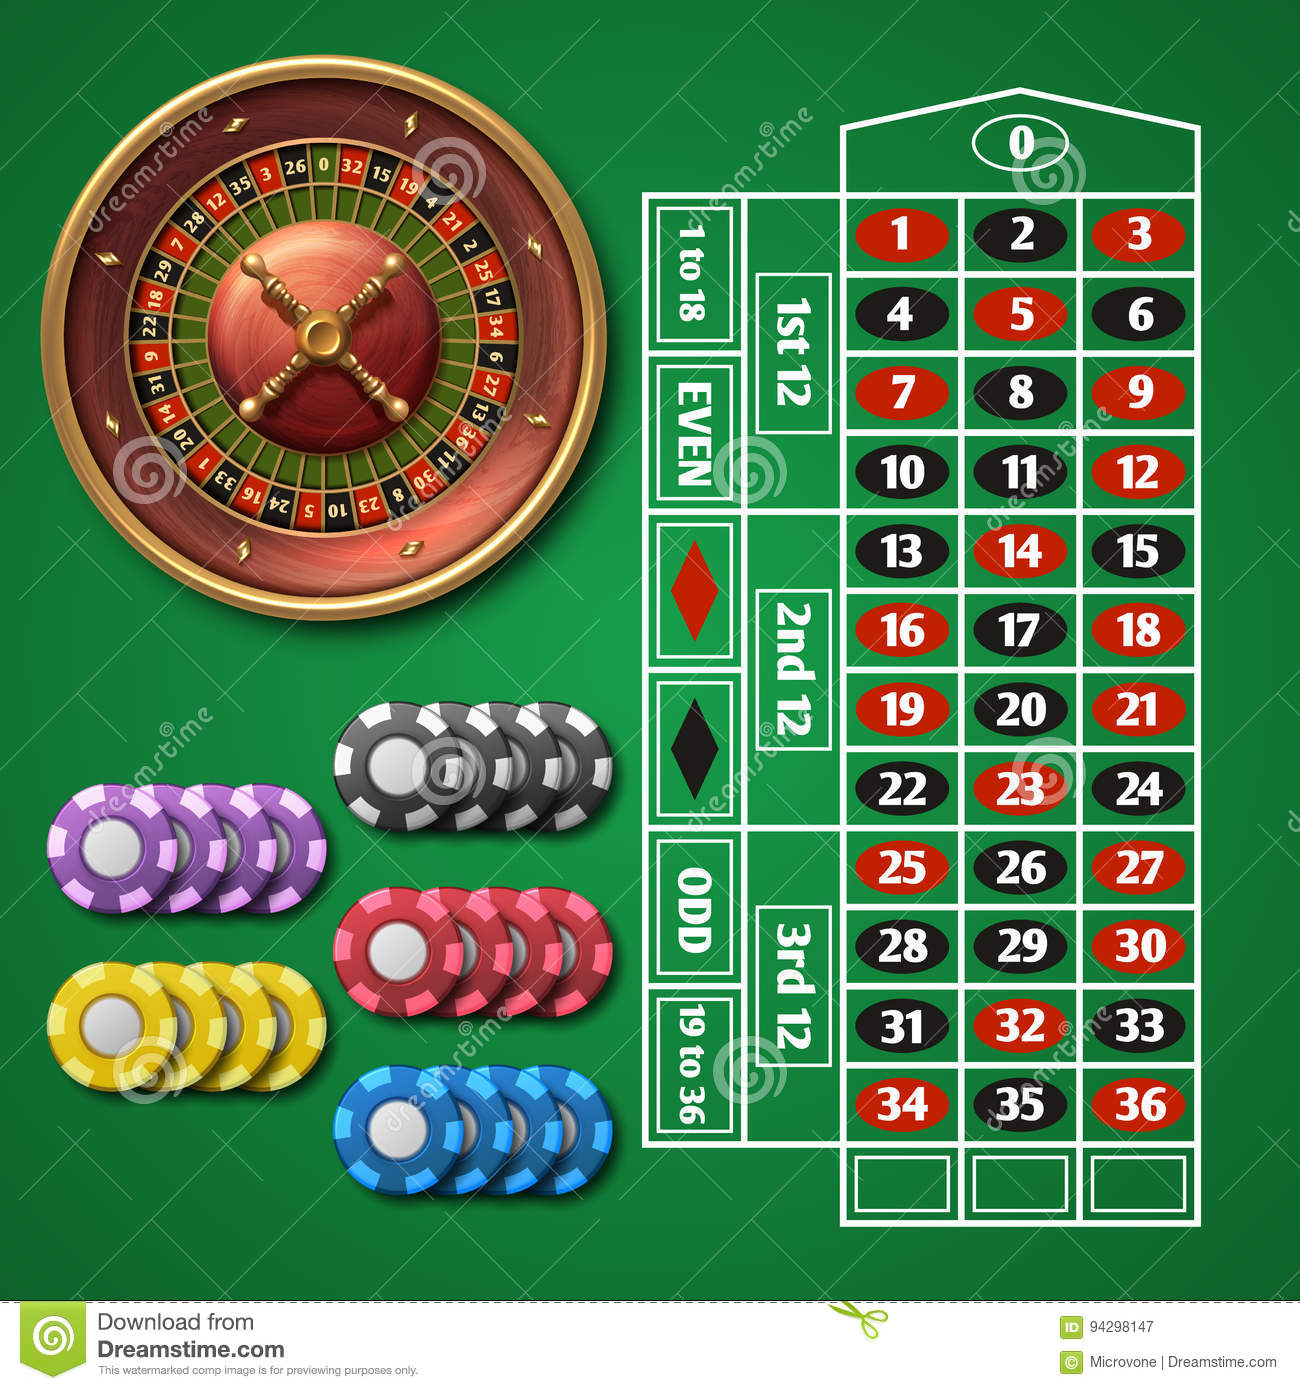 Slot of Money ボーナスフリースピンカジノ